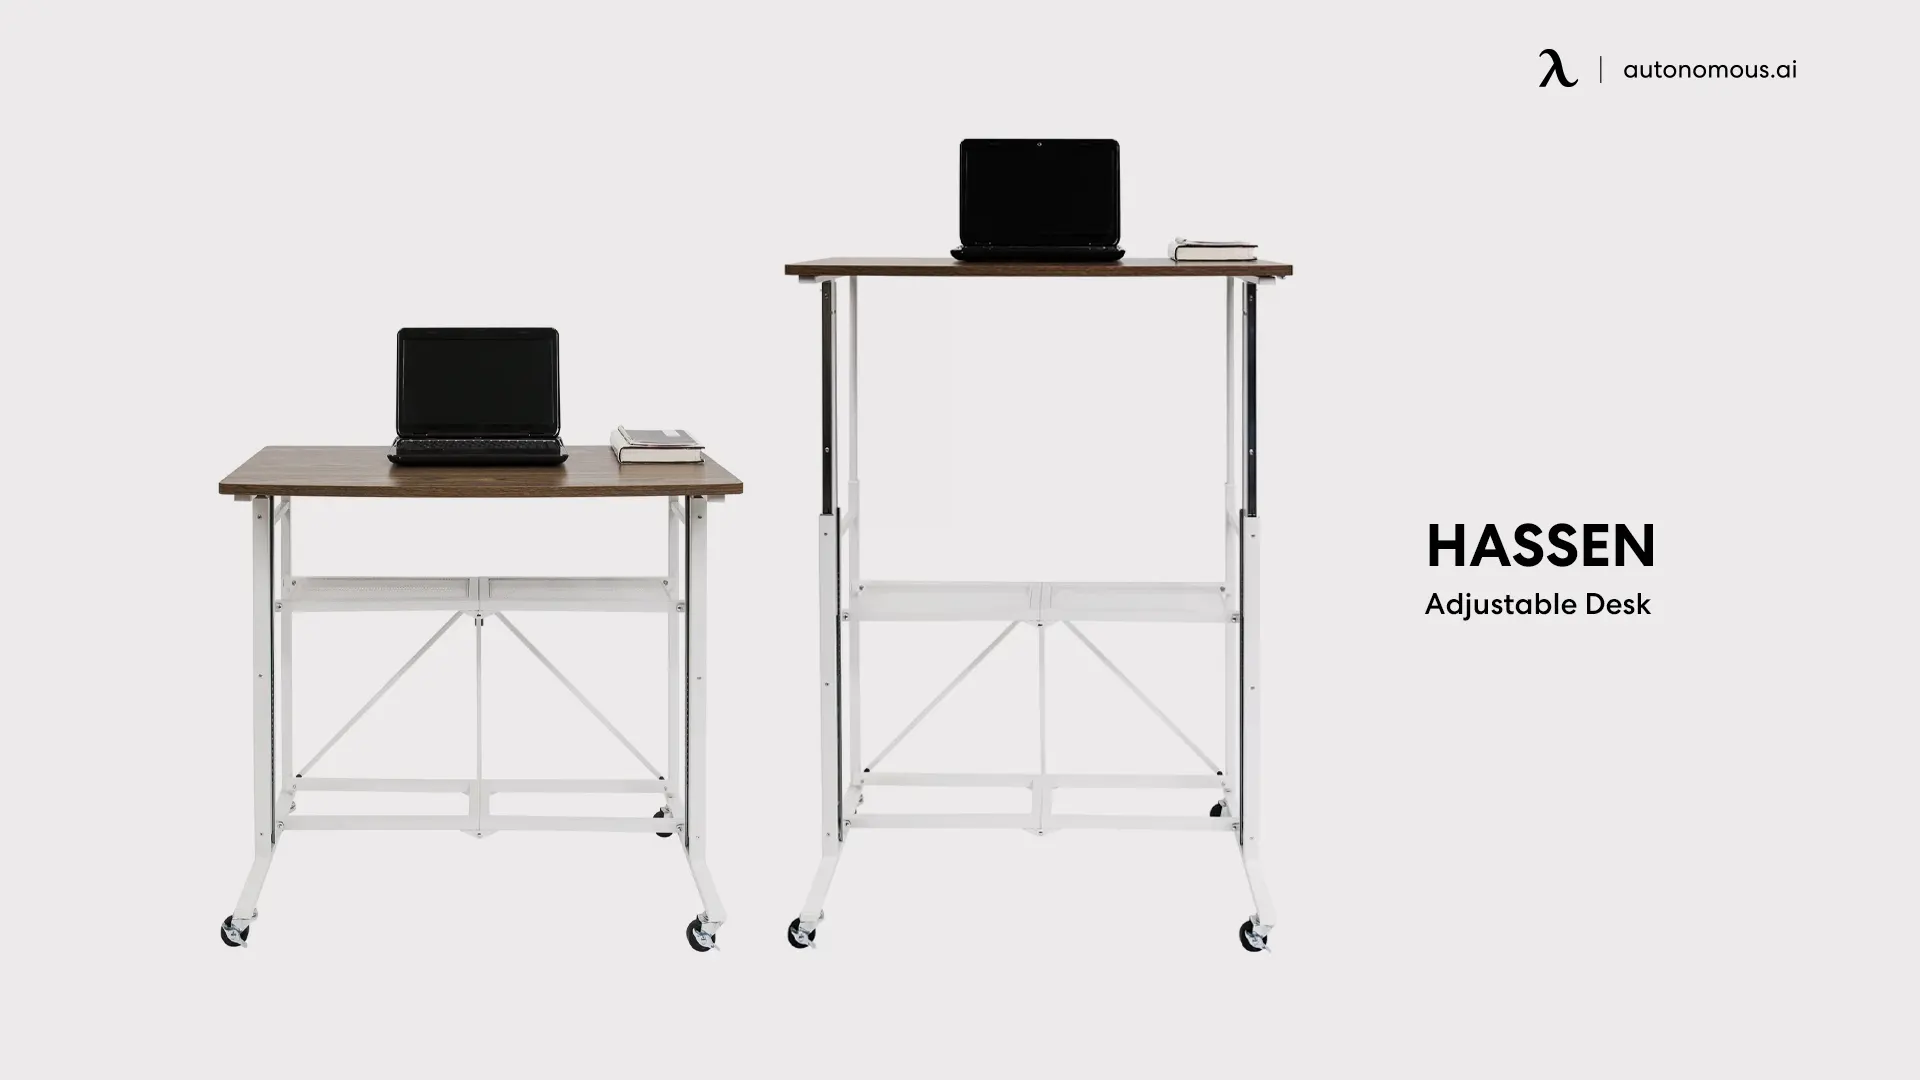 Hassen Adjustable Desk black Friday electronics deals